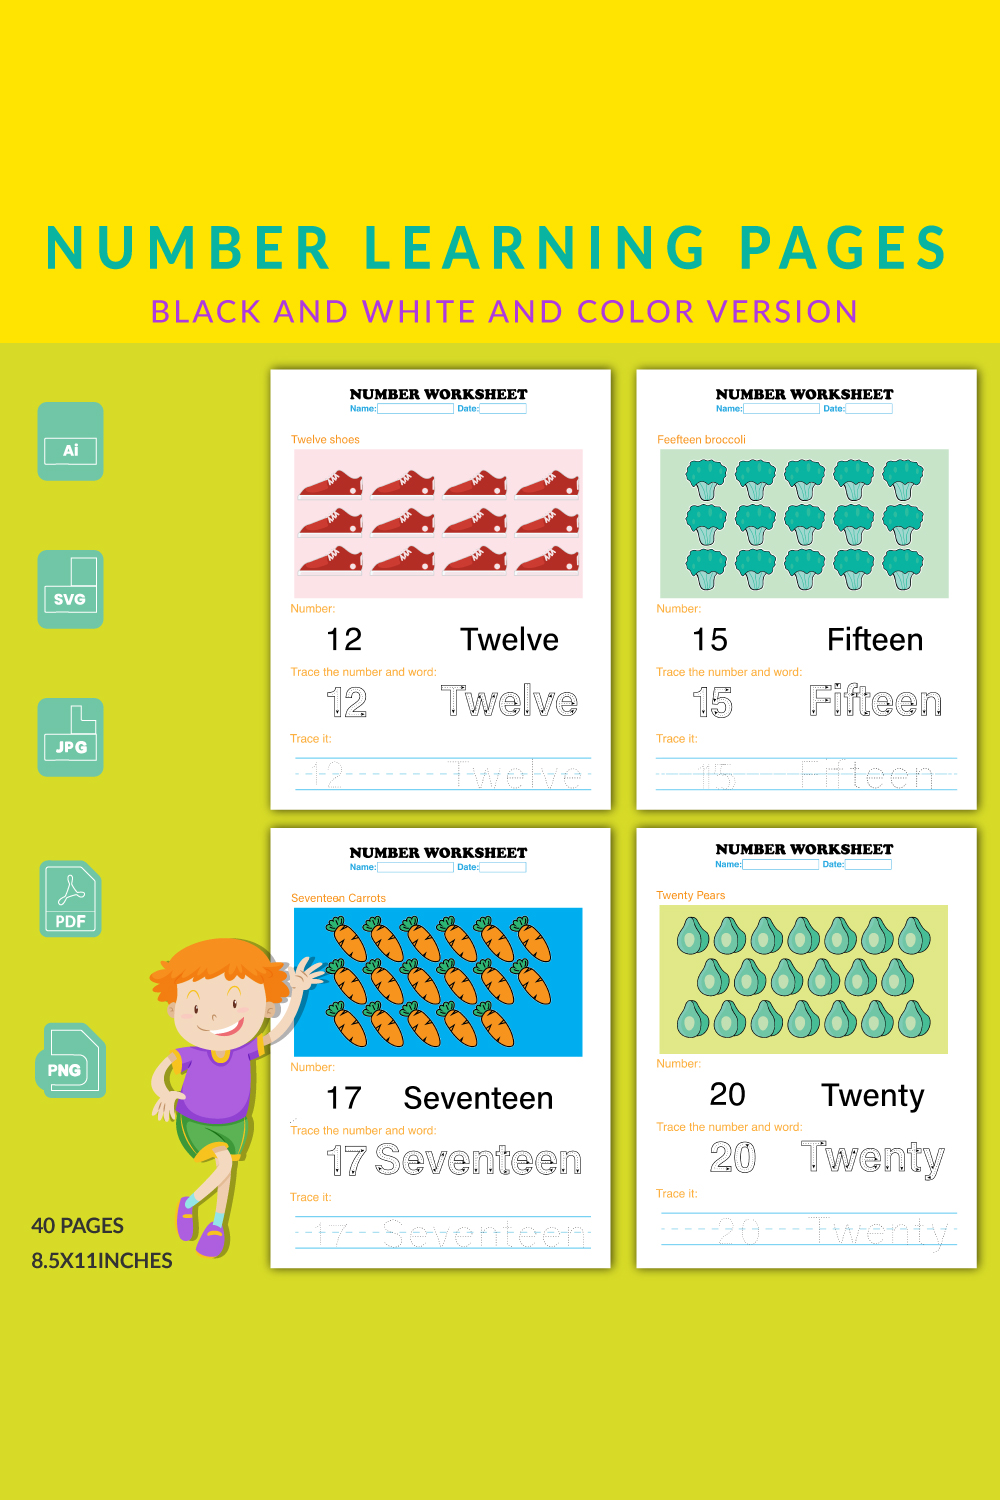 Number Learning Worksheet Two Versions pinterest image.